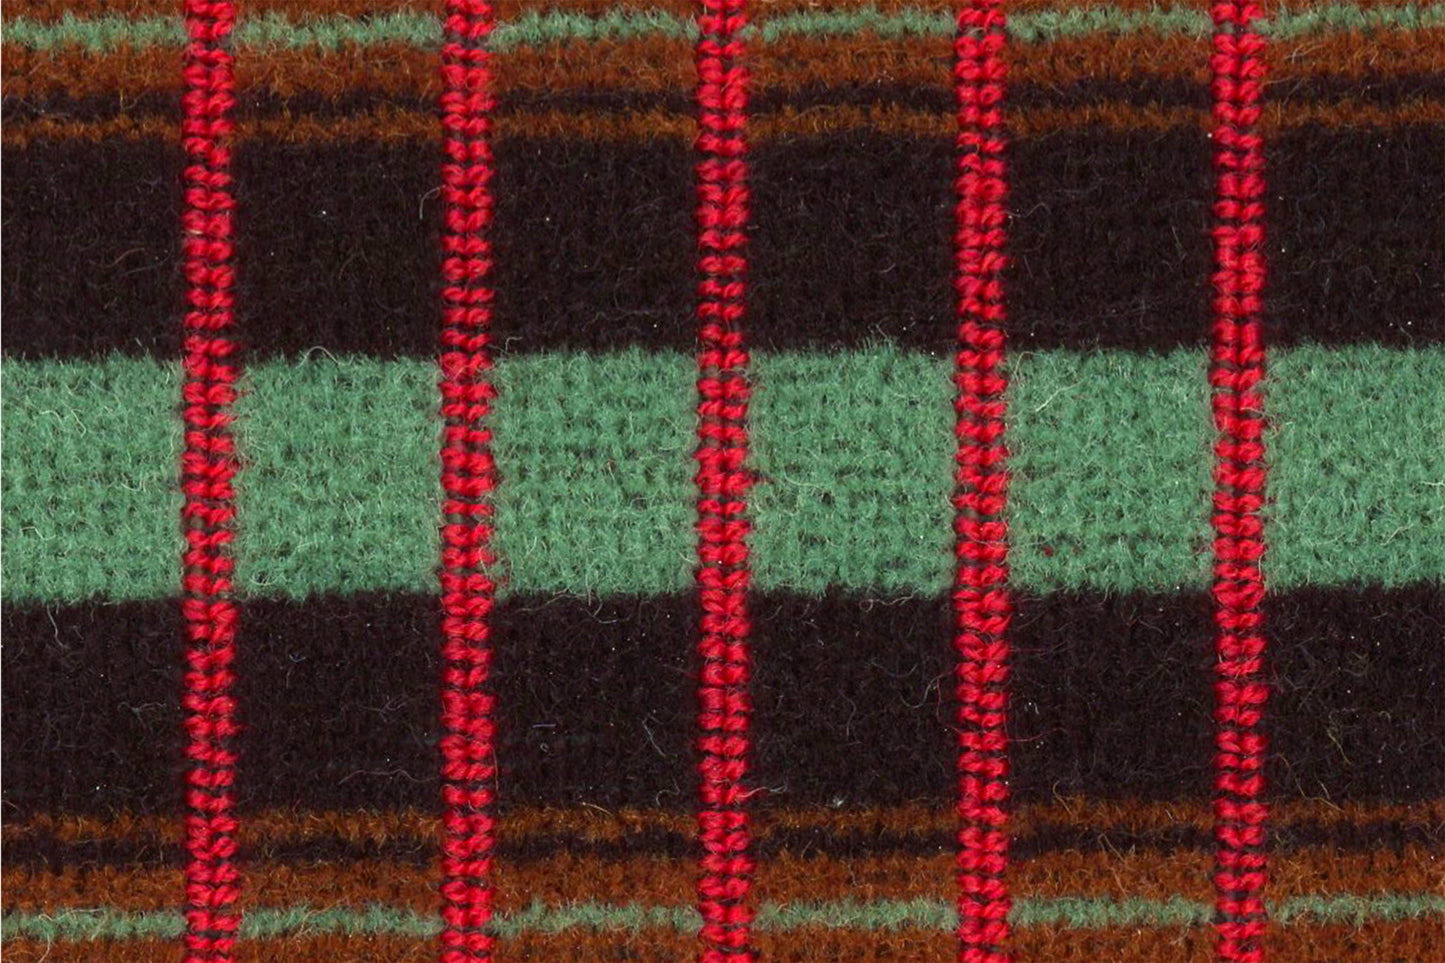 Custom Product using London Bus (1950's) RT Bus Moquette Fabric